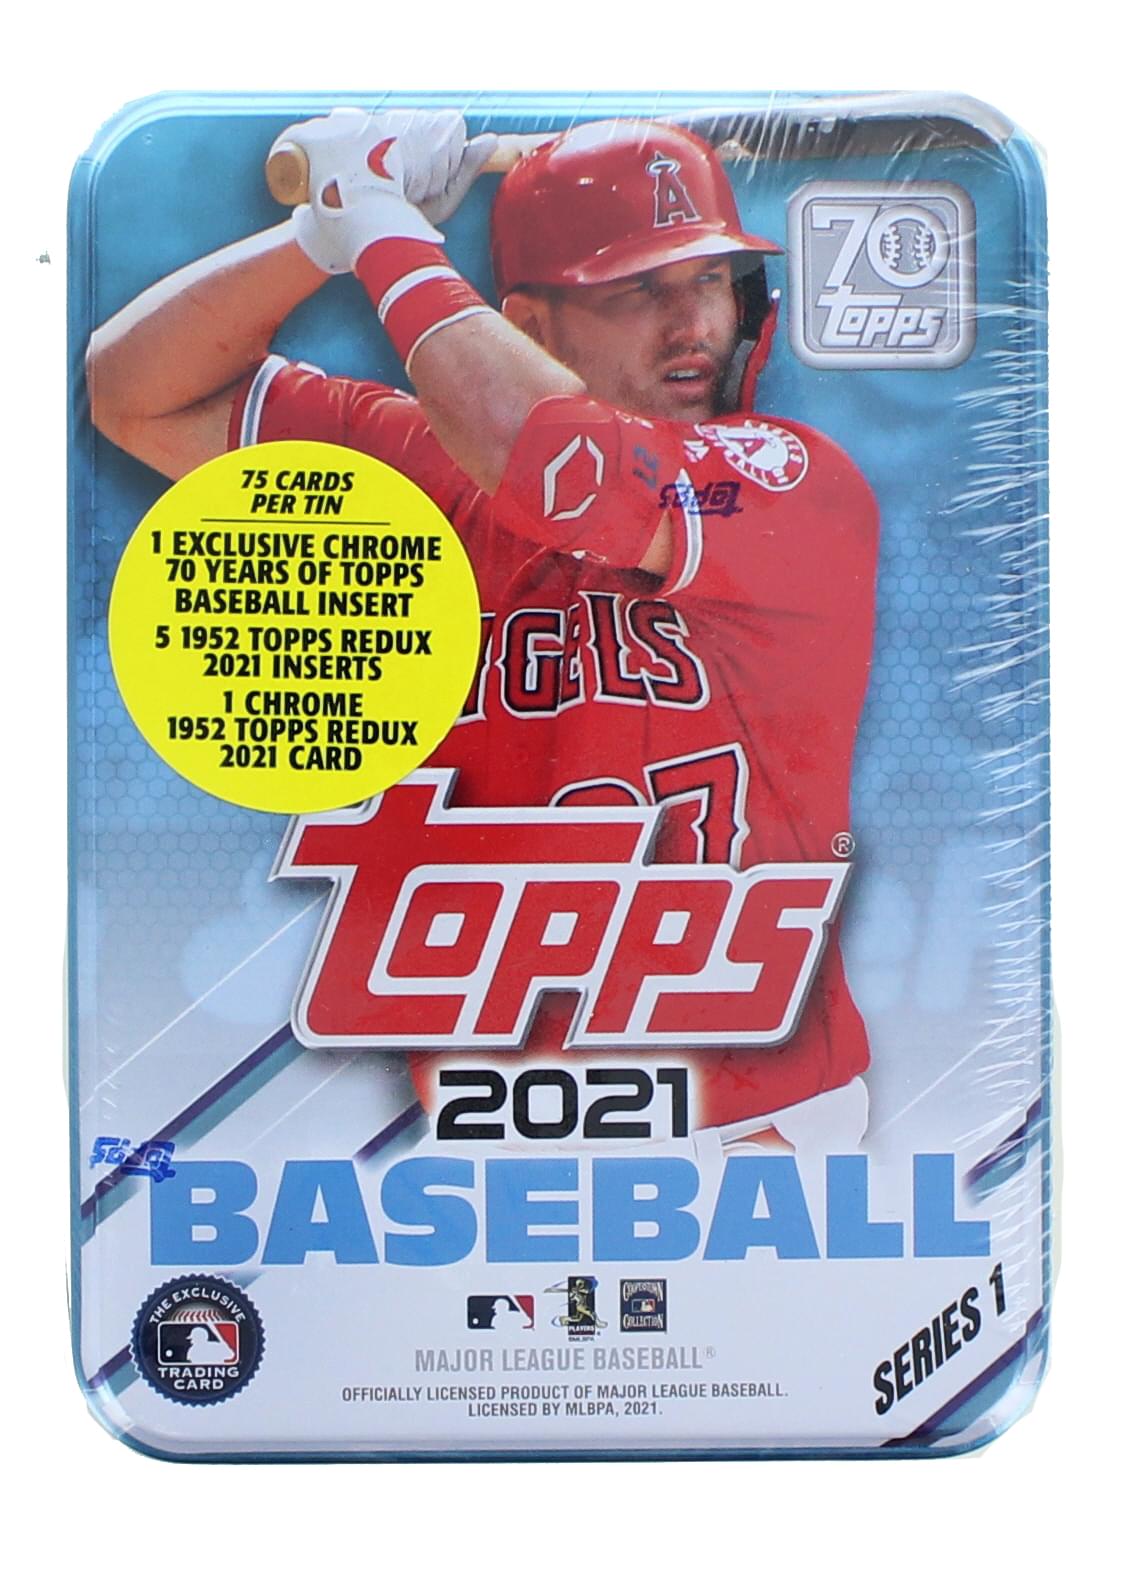 MLB 2021 Topps Series 1 Baseball Tin | 75 Cards